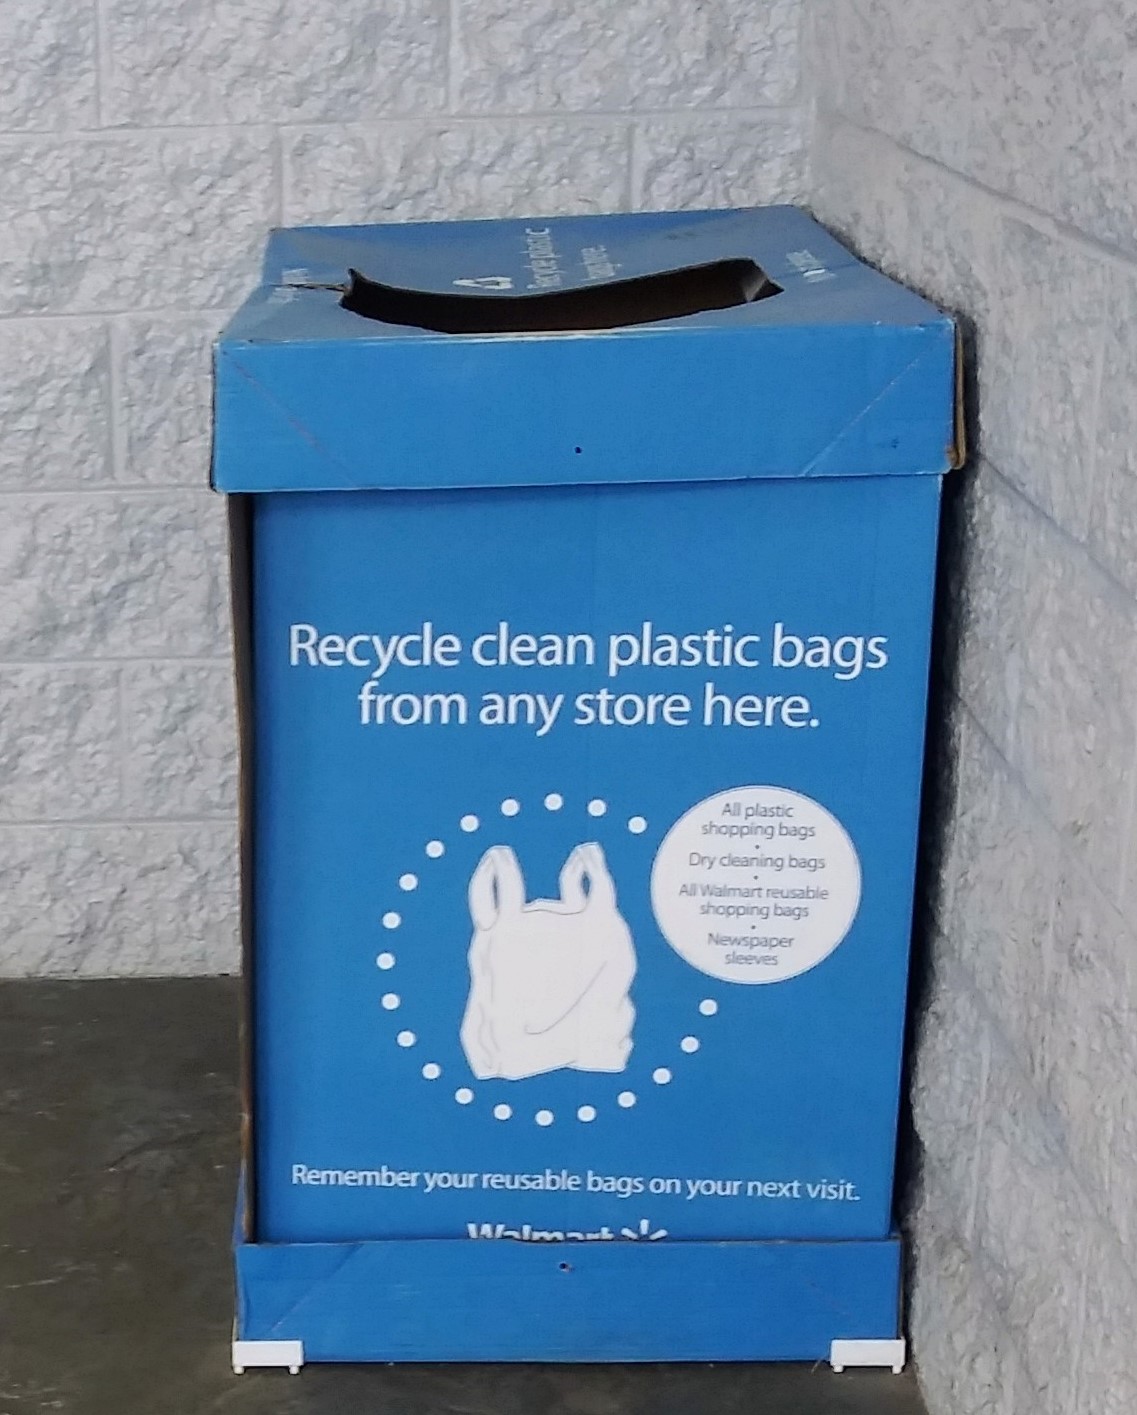 Plastic bags recycling Walmart 1 (3)